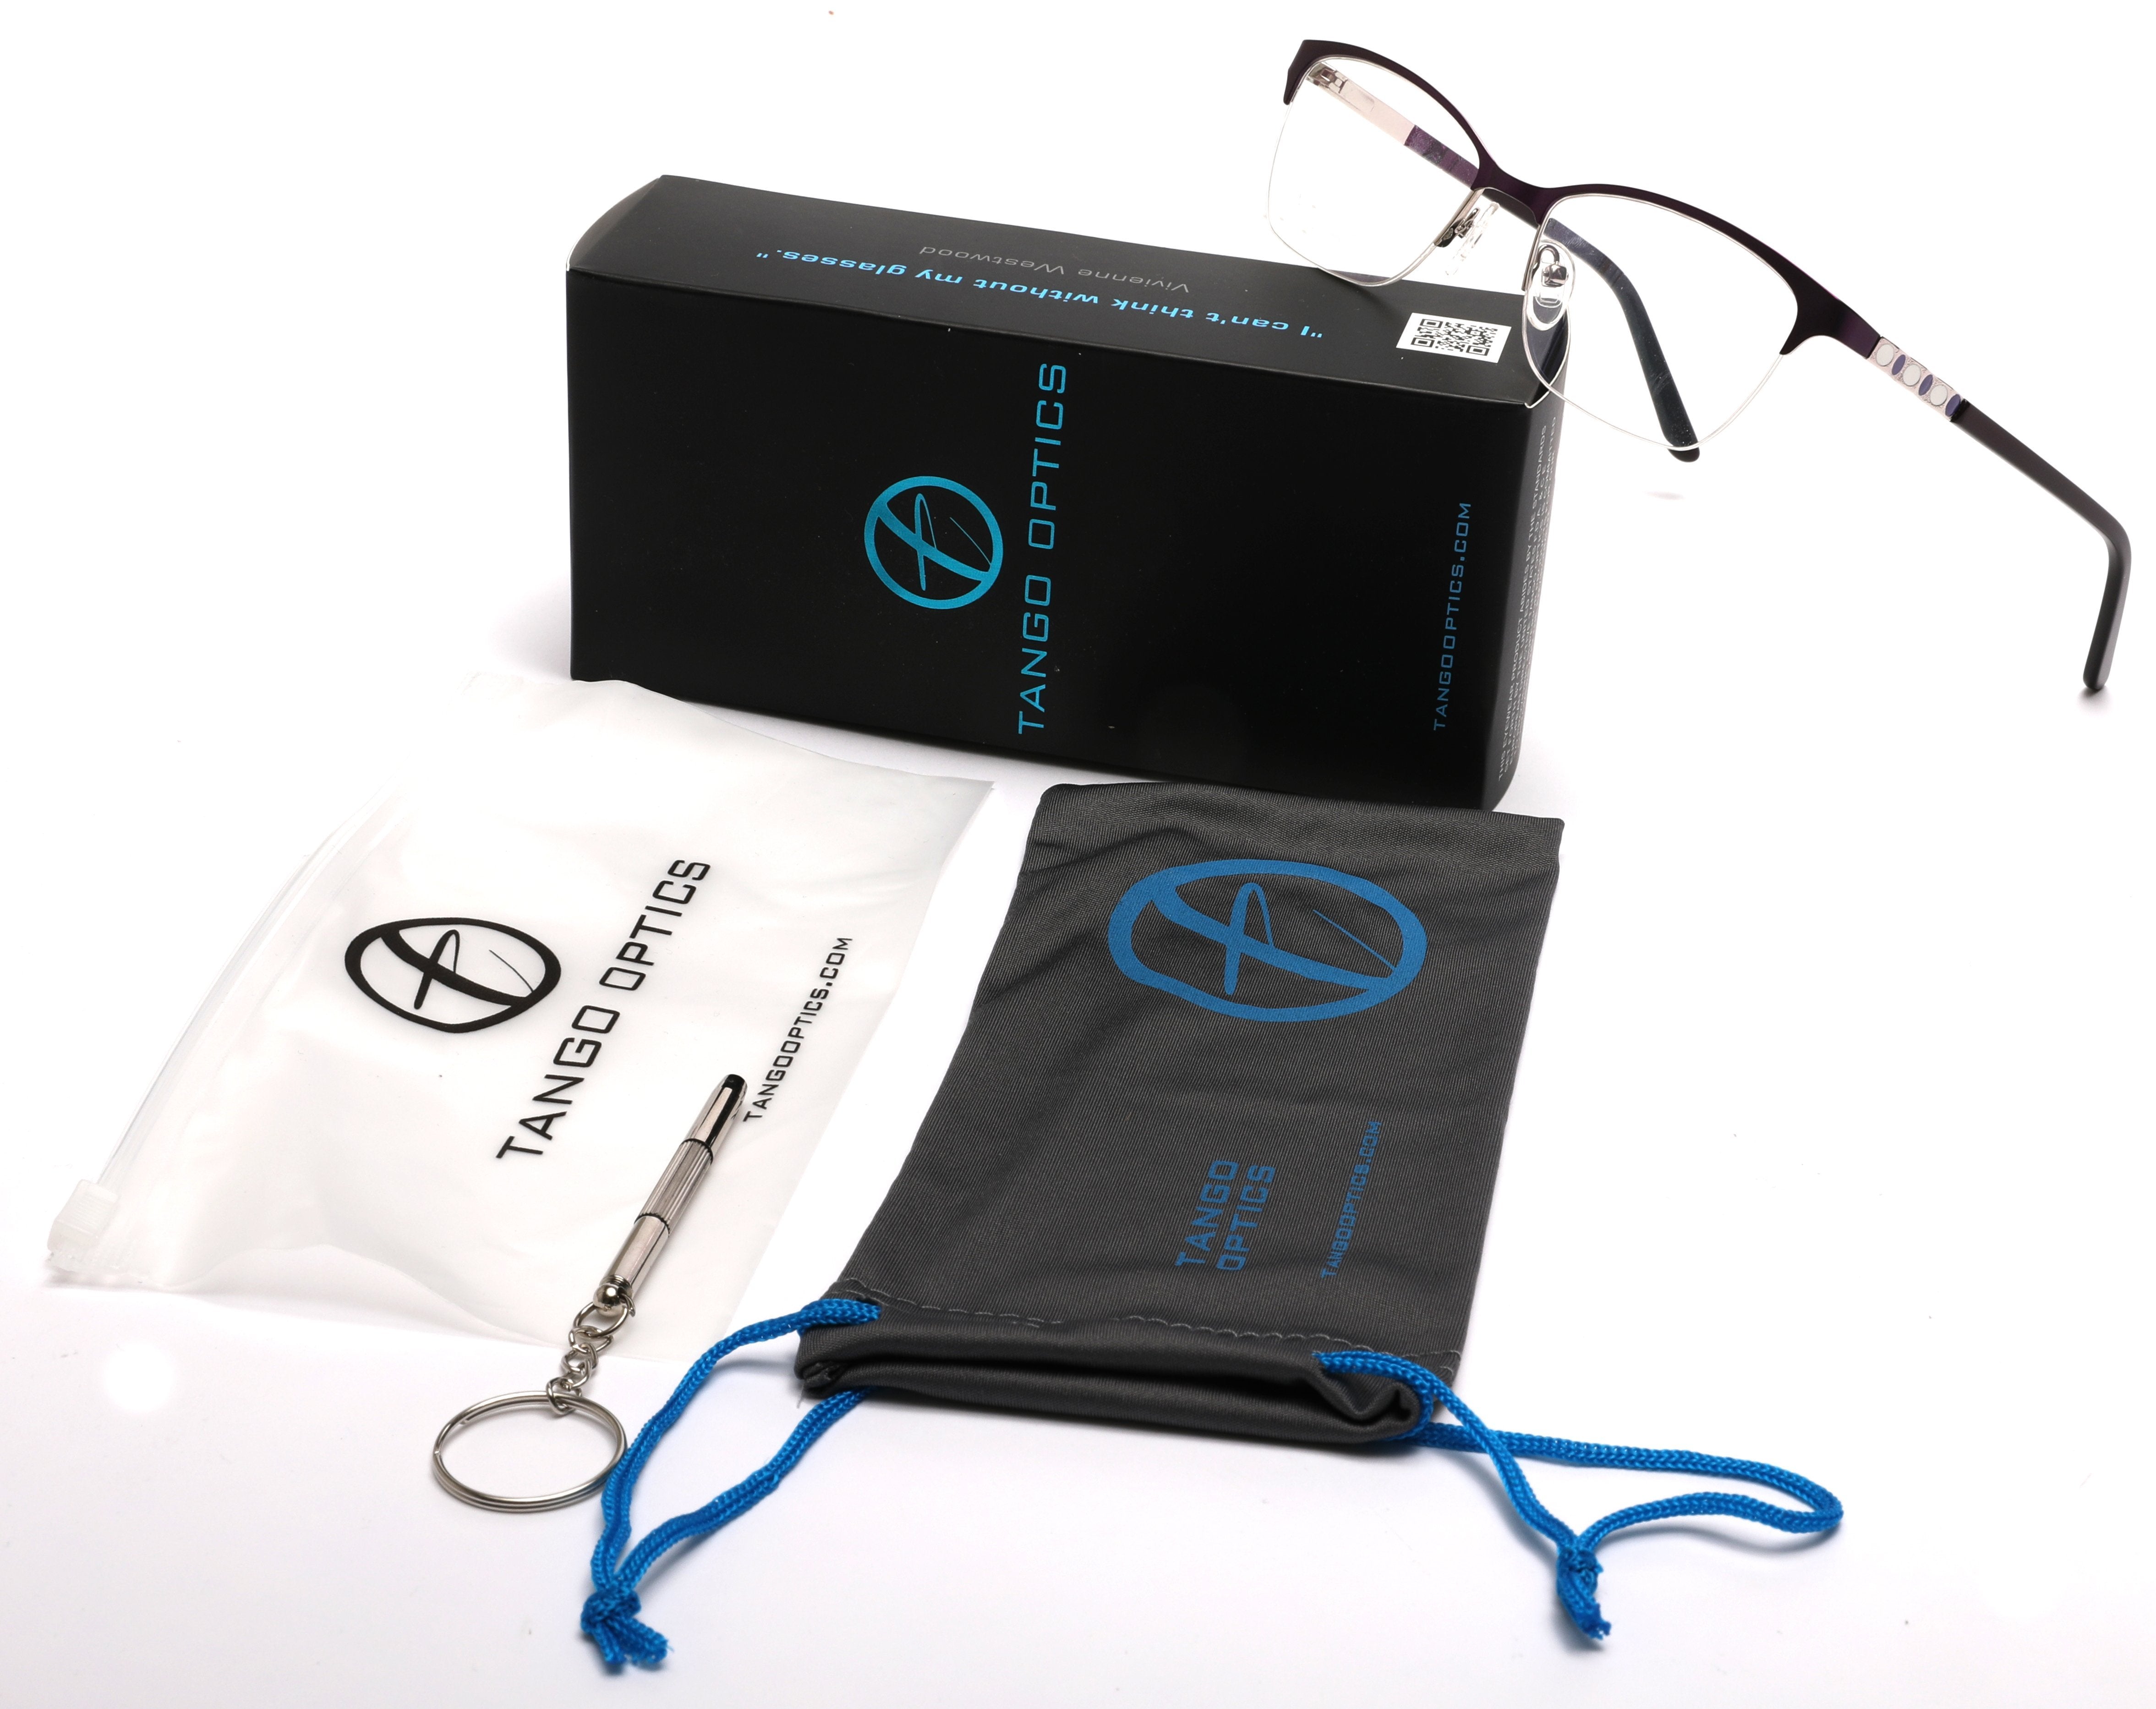 Tango Optics Cateye Metal Eyeglasses Frame Luxe RX Stainless Helen Brooke Taussig Purple For Prescription Lens-Samba Shades